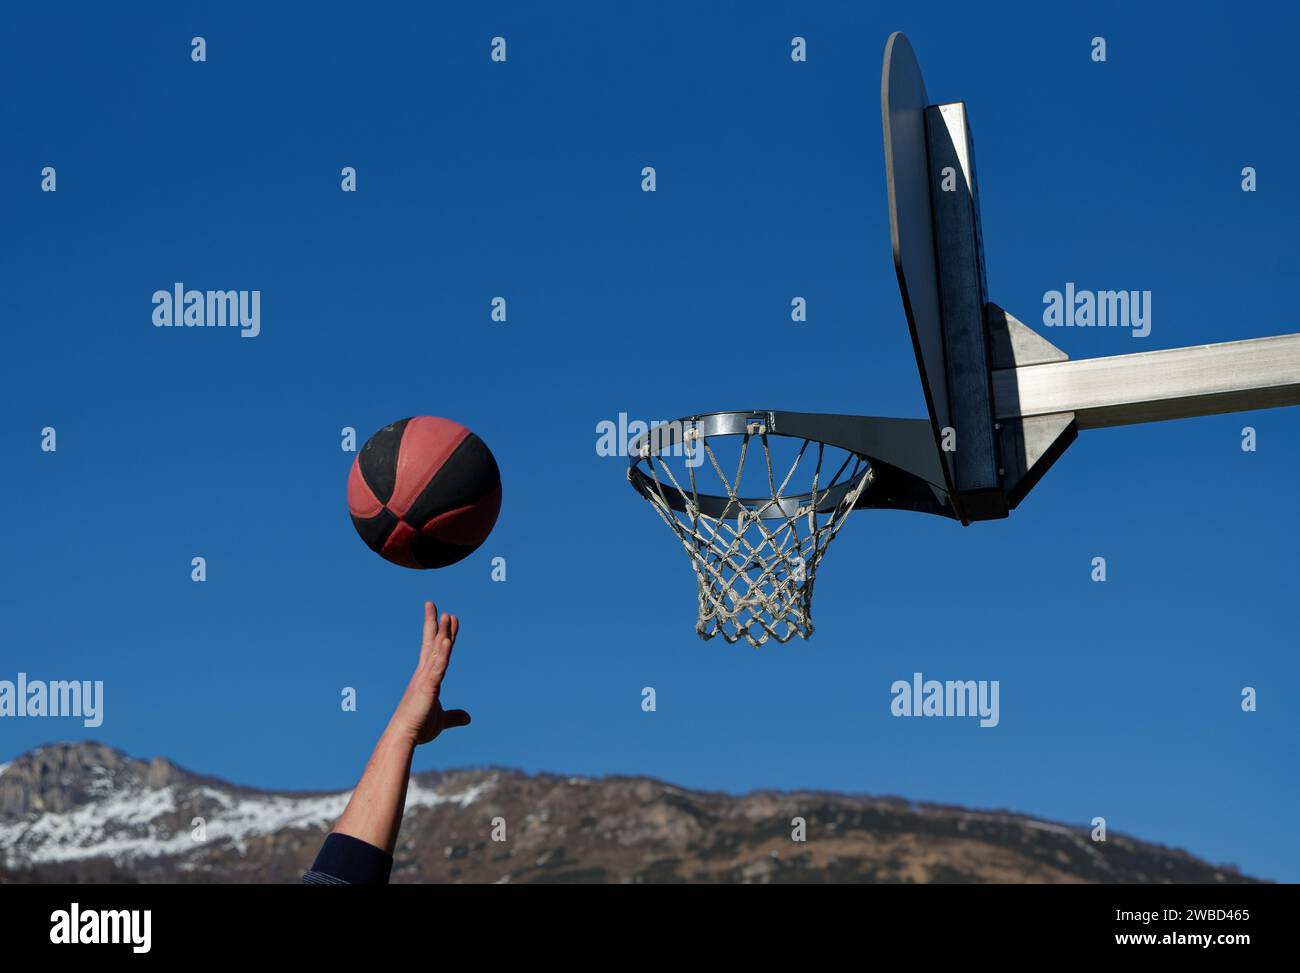 Player shooting at a basketball hoop. playing basket-ball. Stock Photo